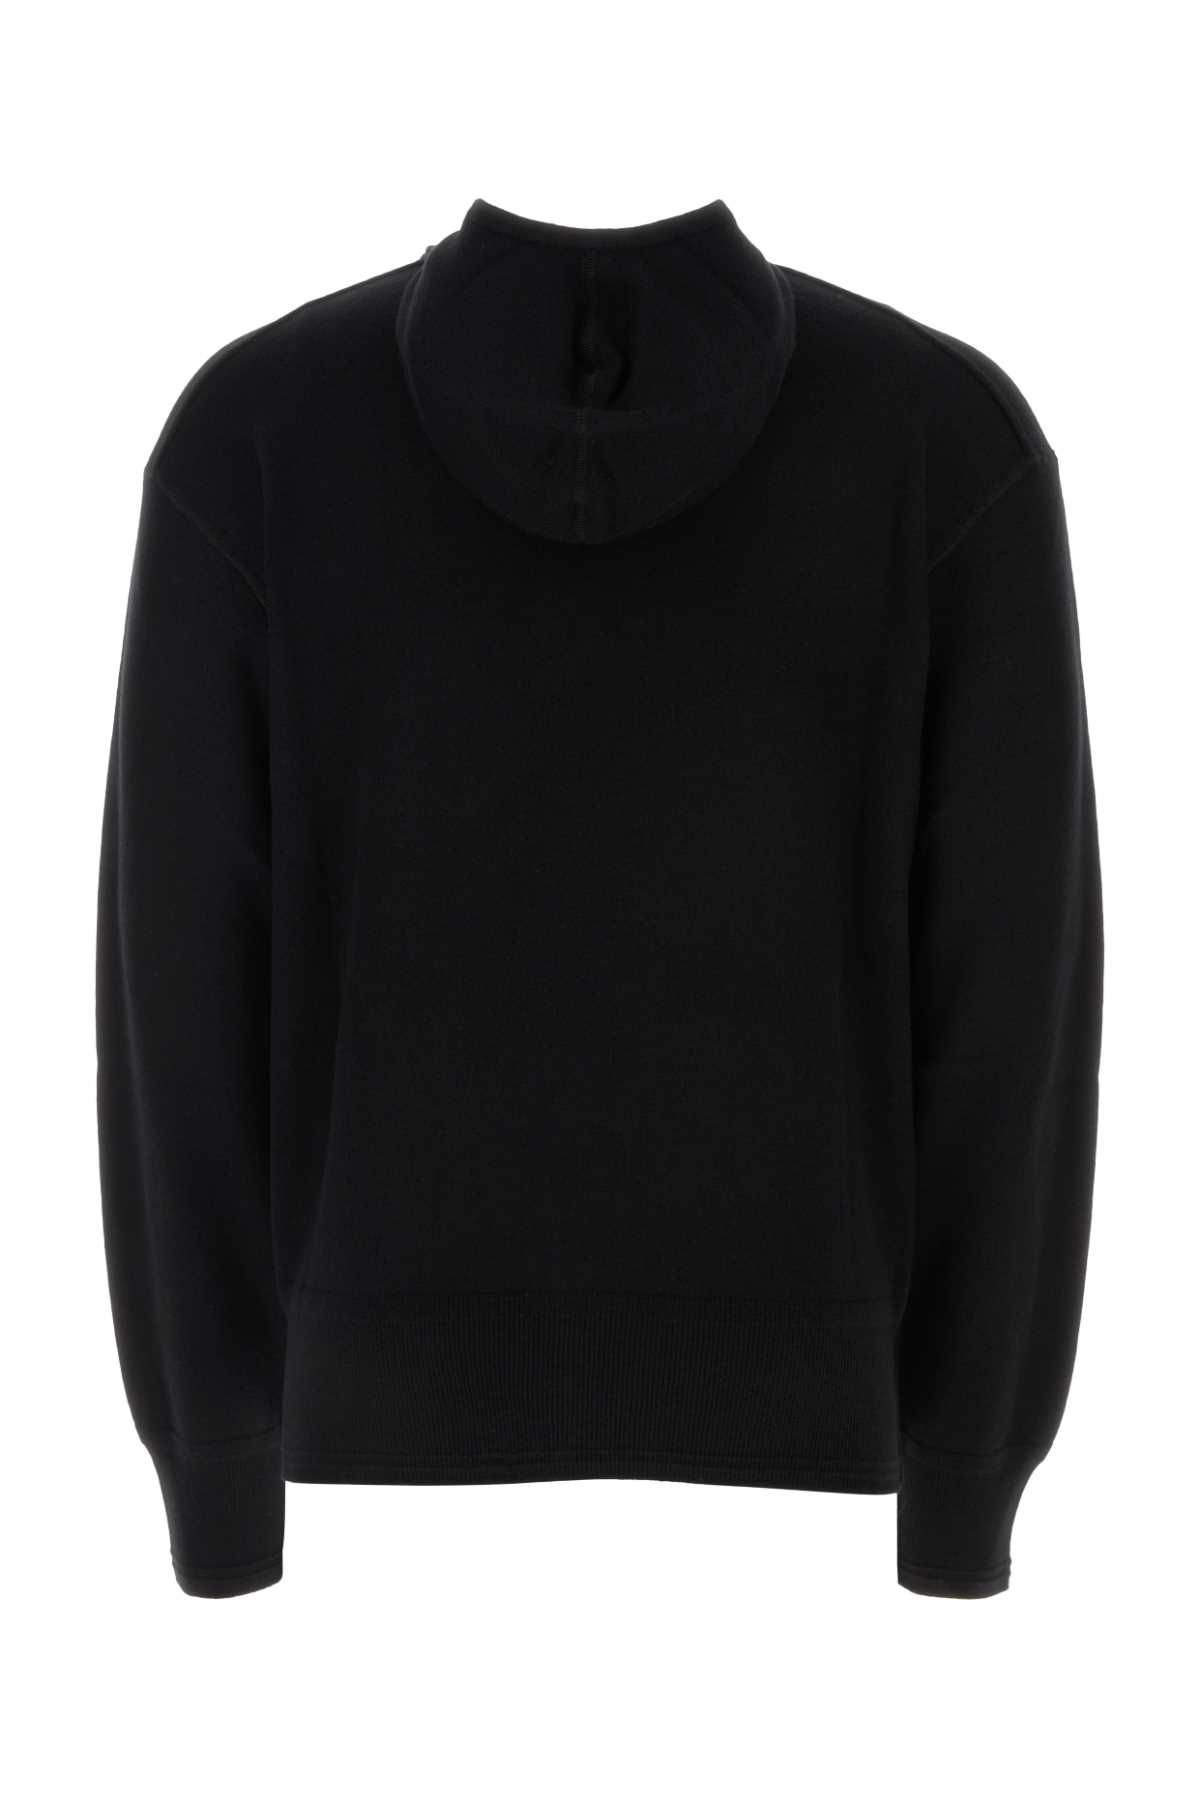 Burberry Black Wool Sweatshirt